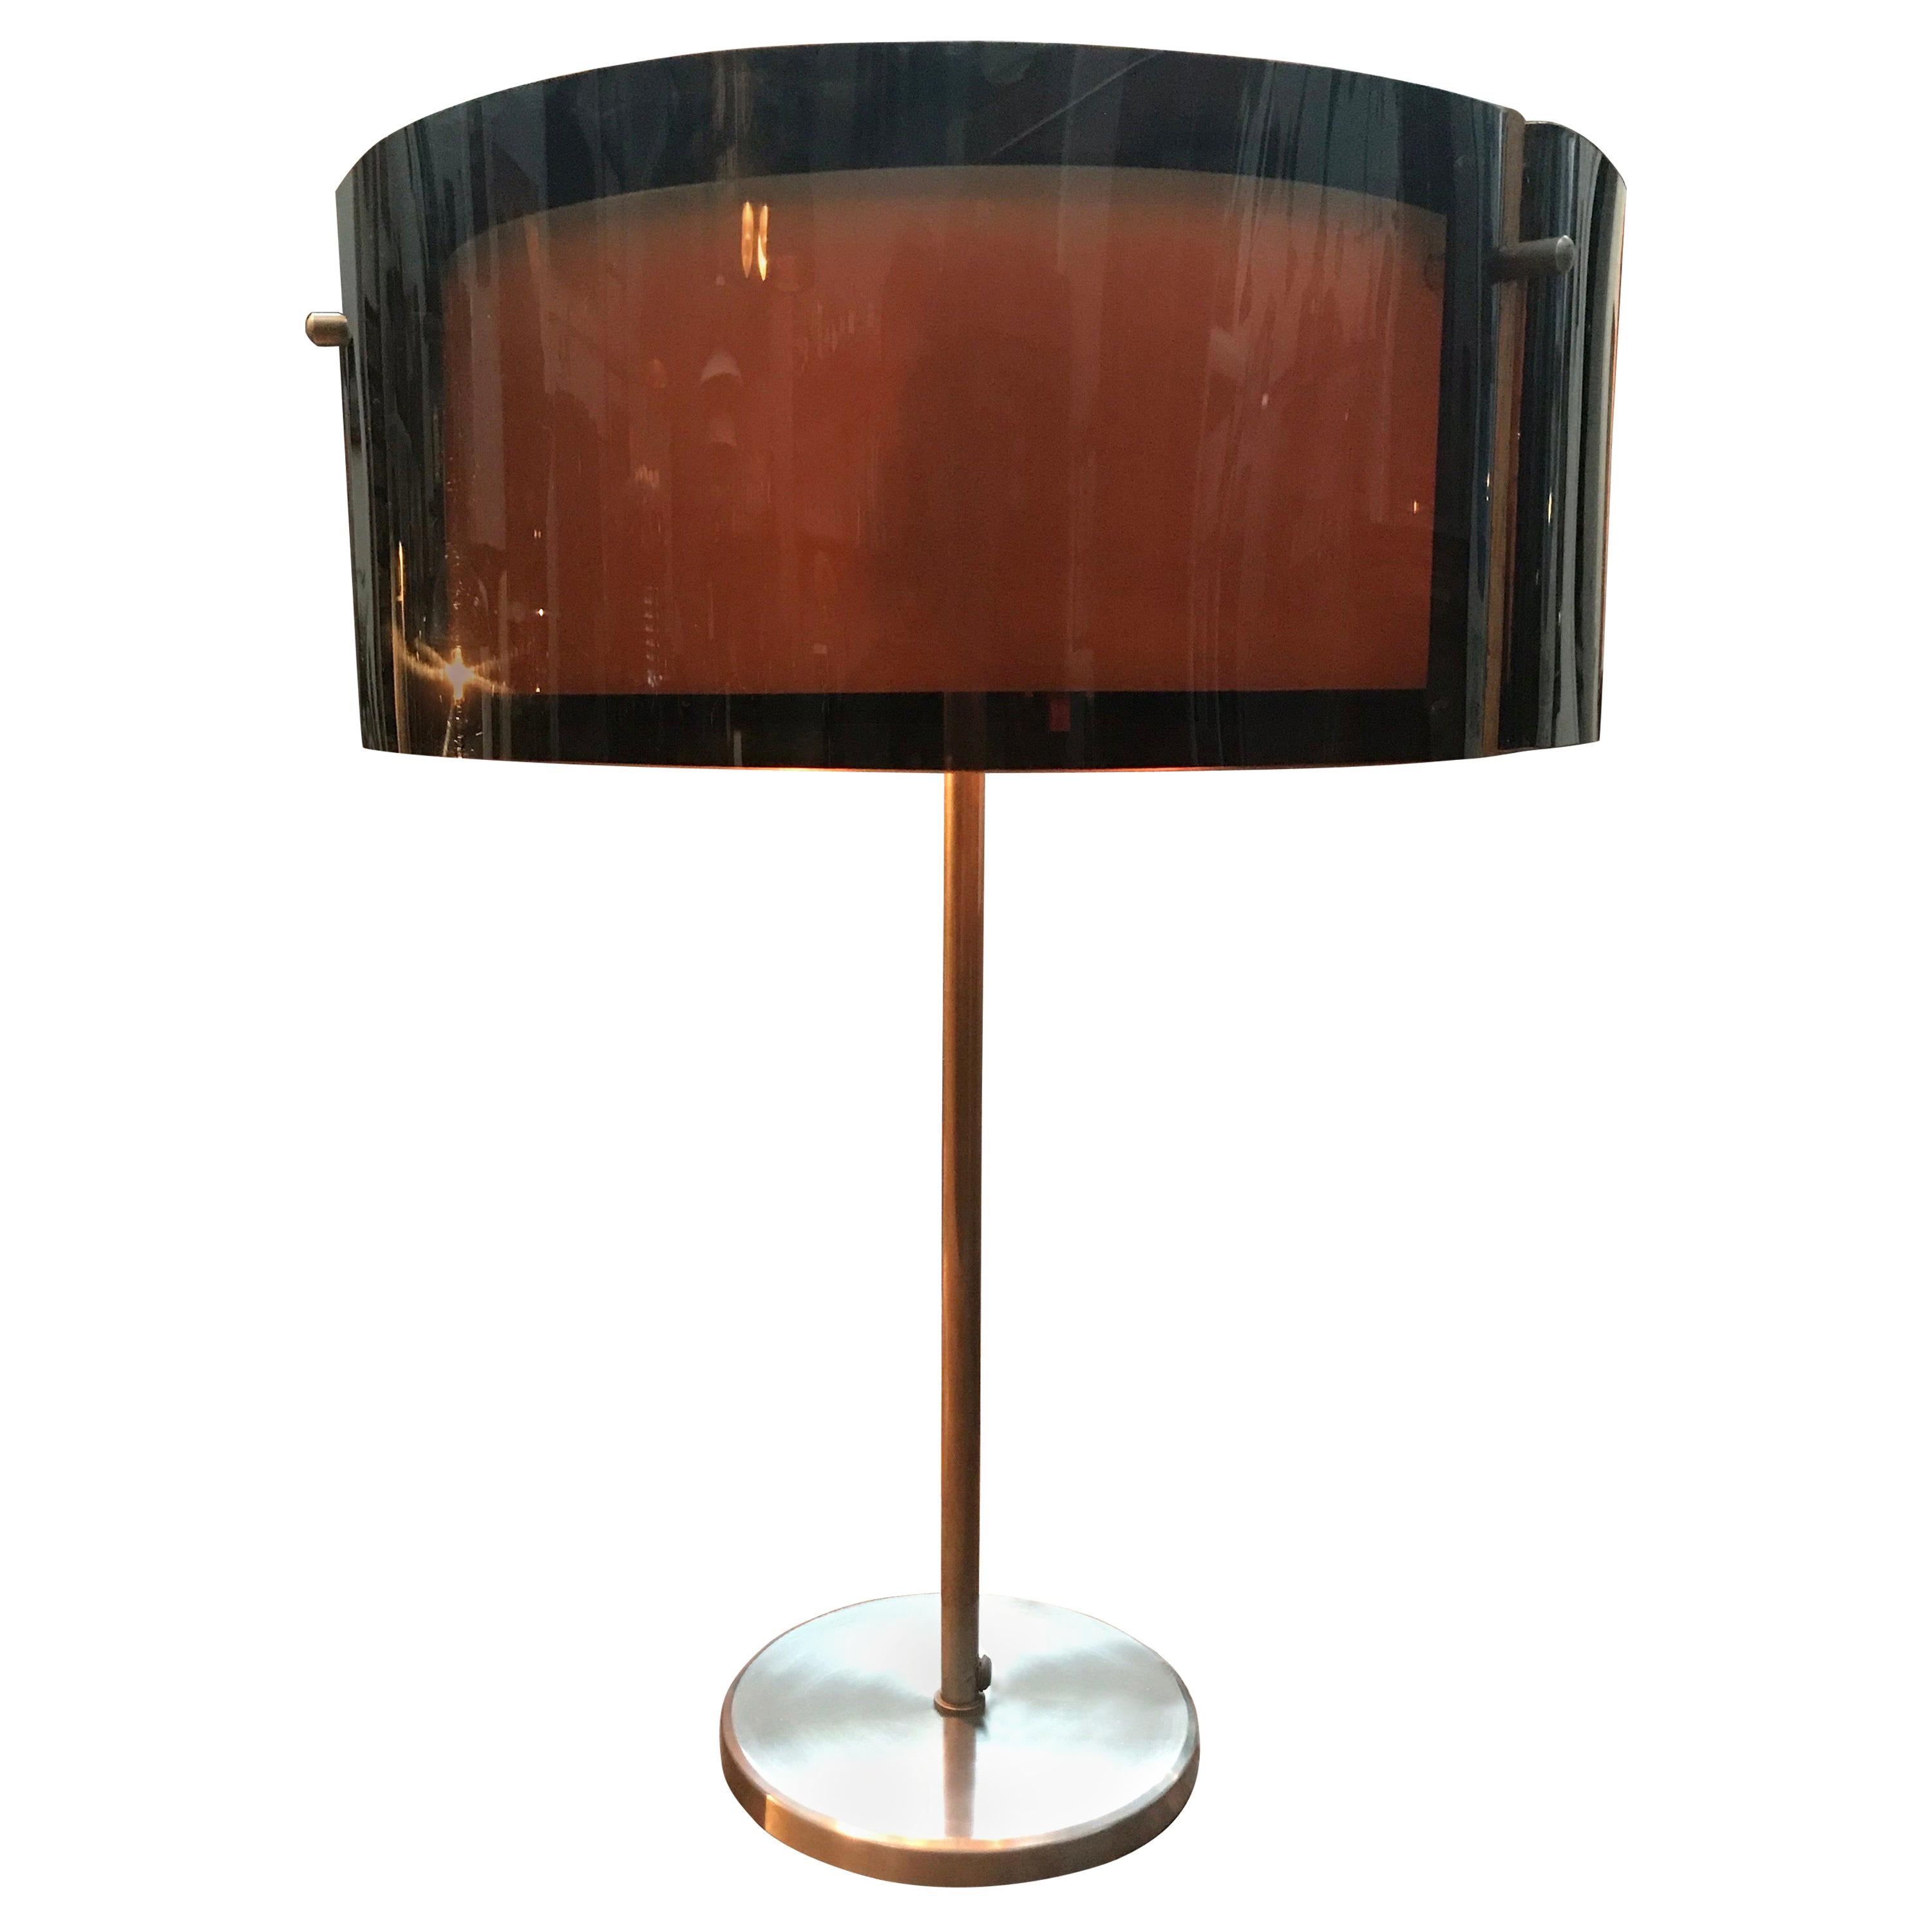 Stylish Mid-Century Modern Danish Table Lamp designed By Kemp & Lauritzen